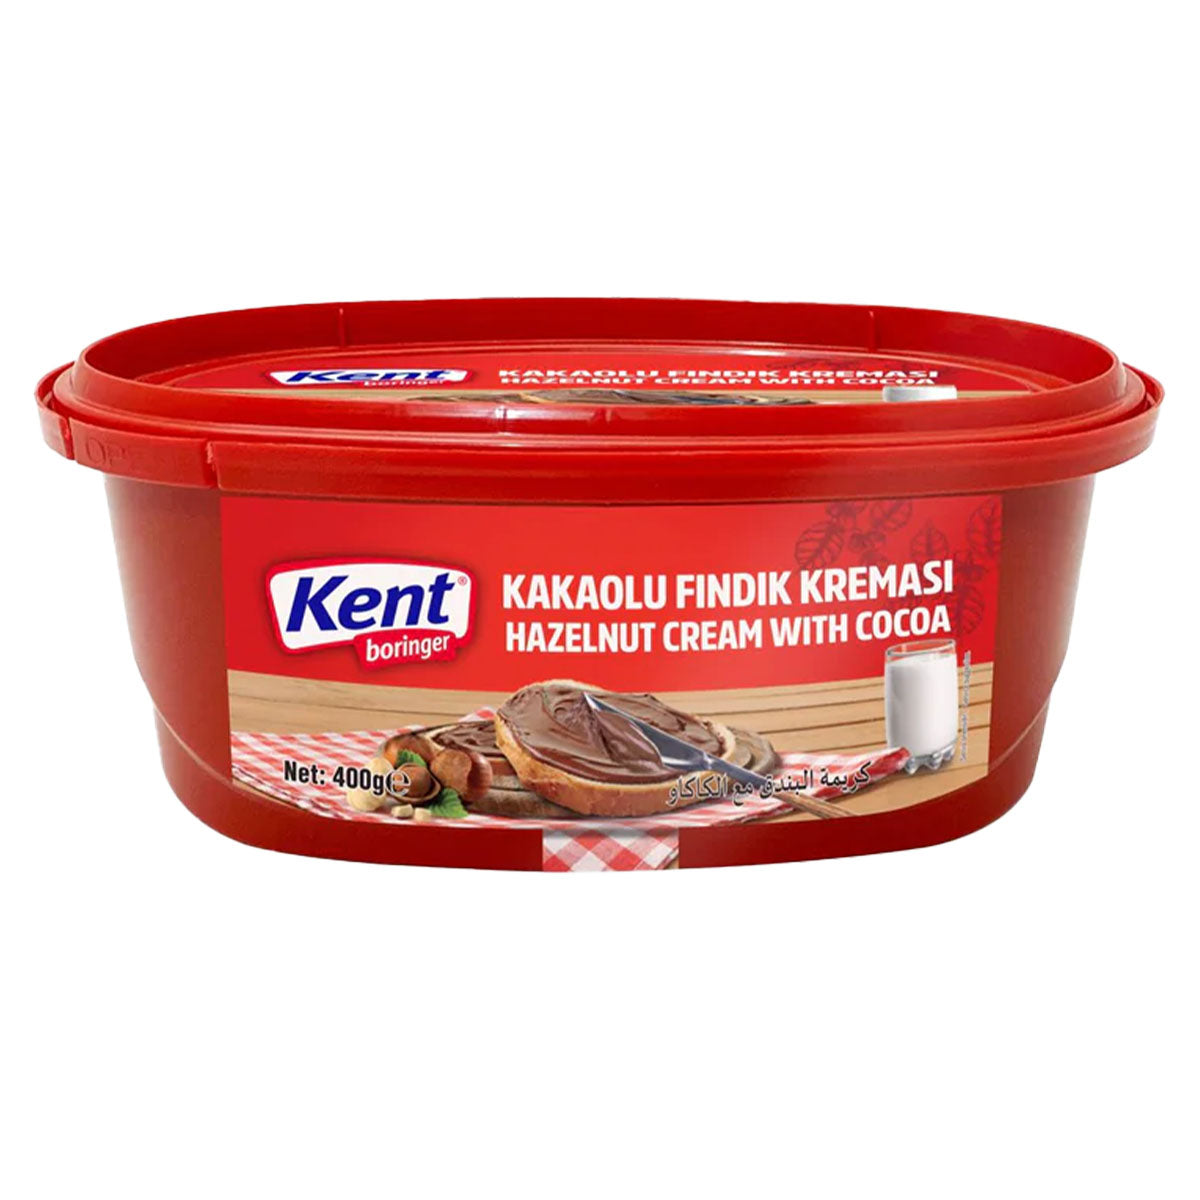 Kent Hazelnut Cream Chocolate - 400g kakuli fenna cream with cocoa.